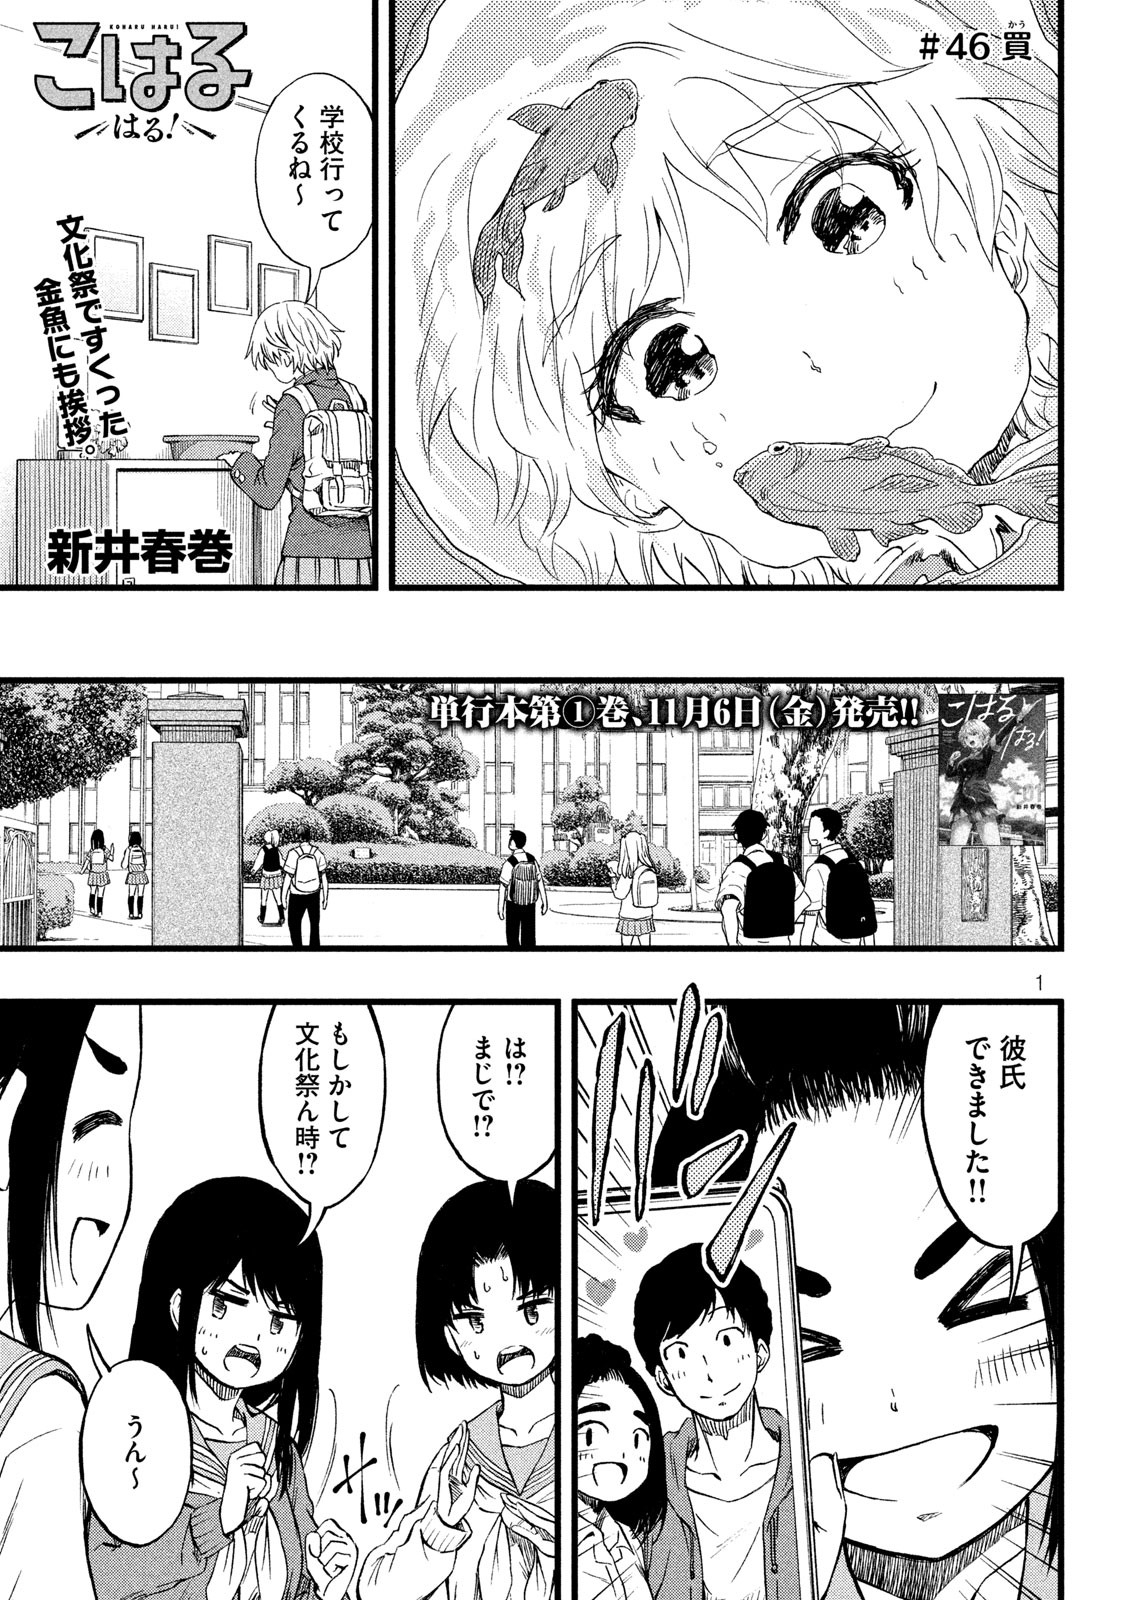 Koharu haru! - Chapter 46 - Page 1